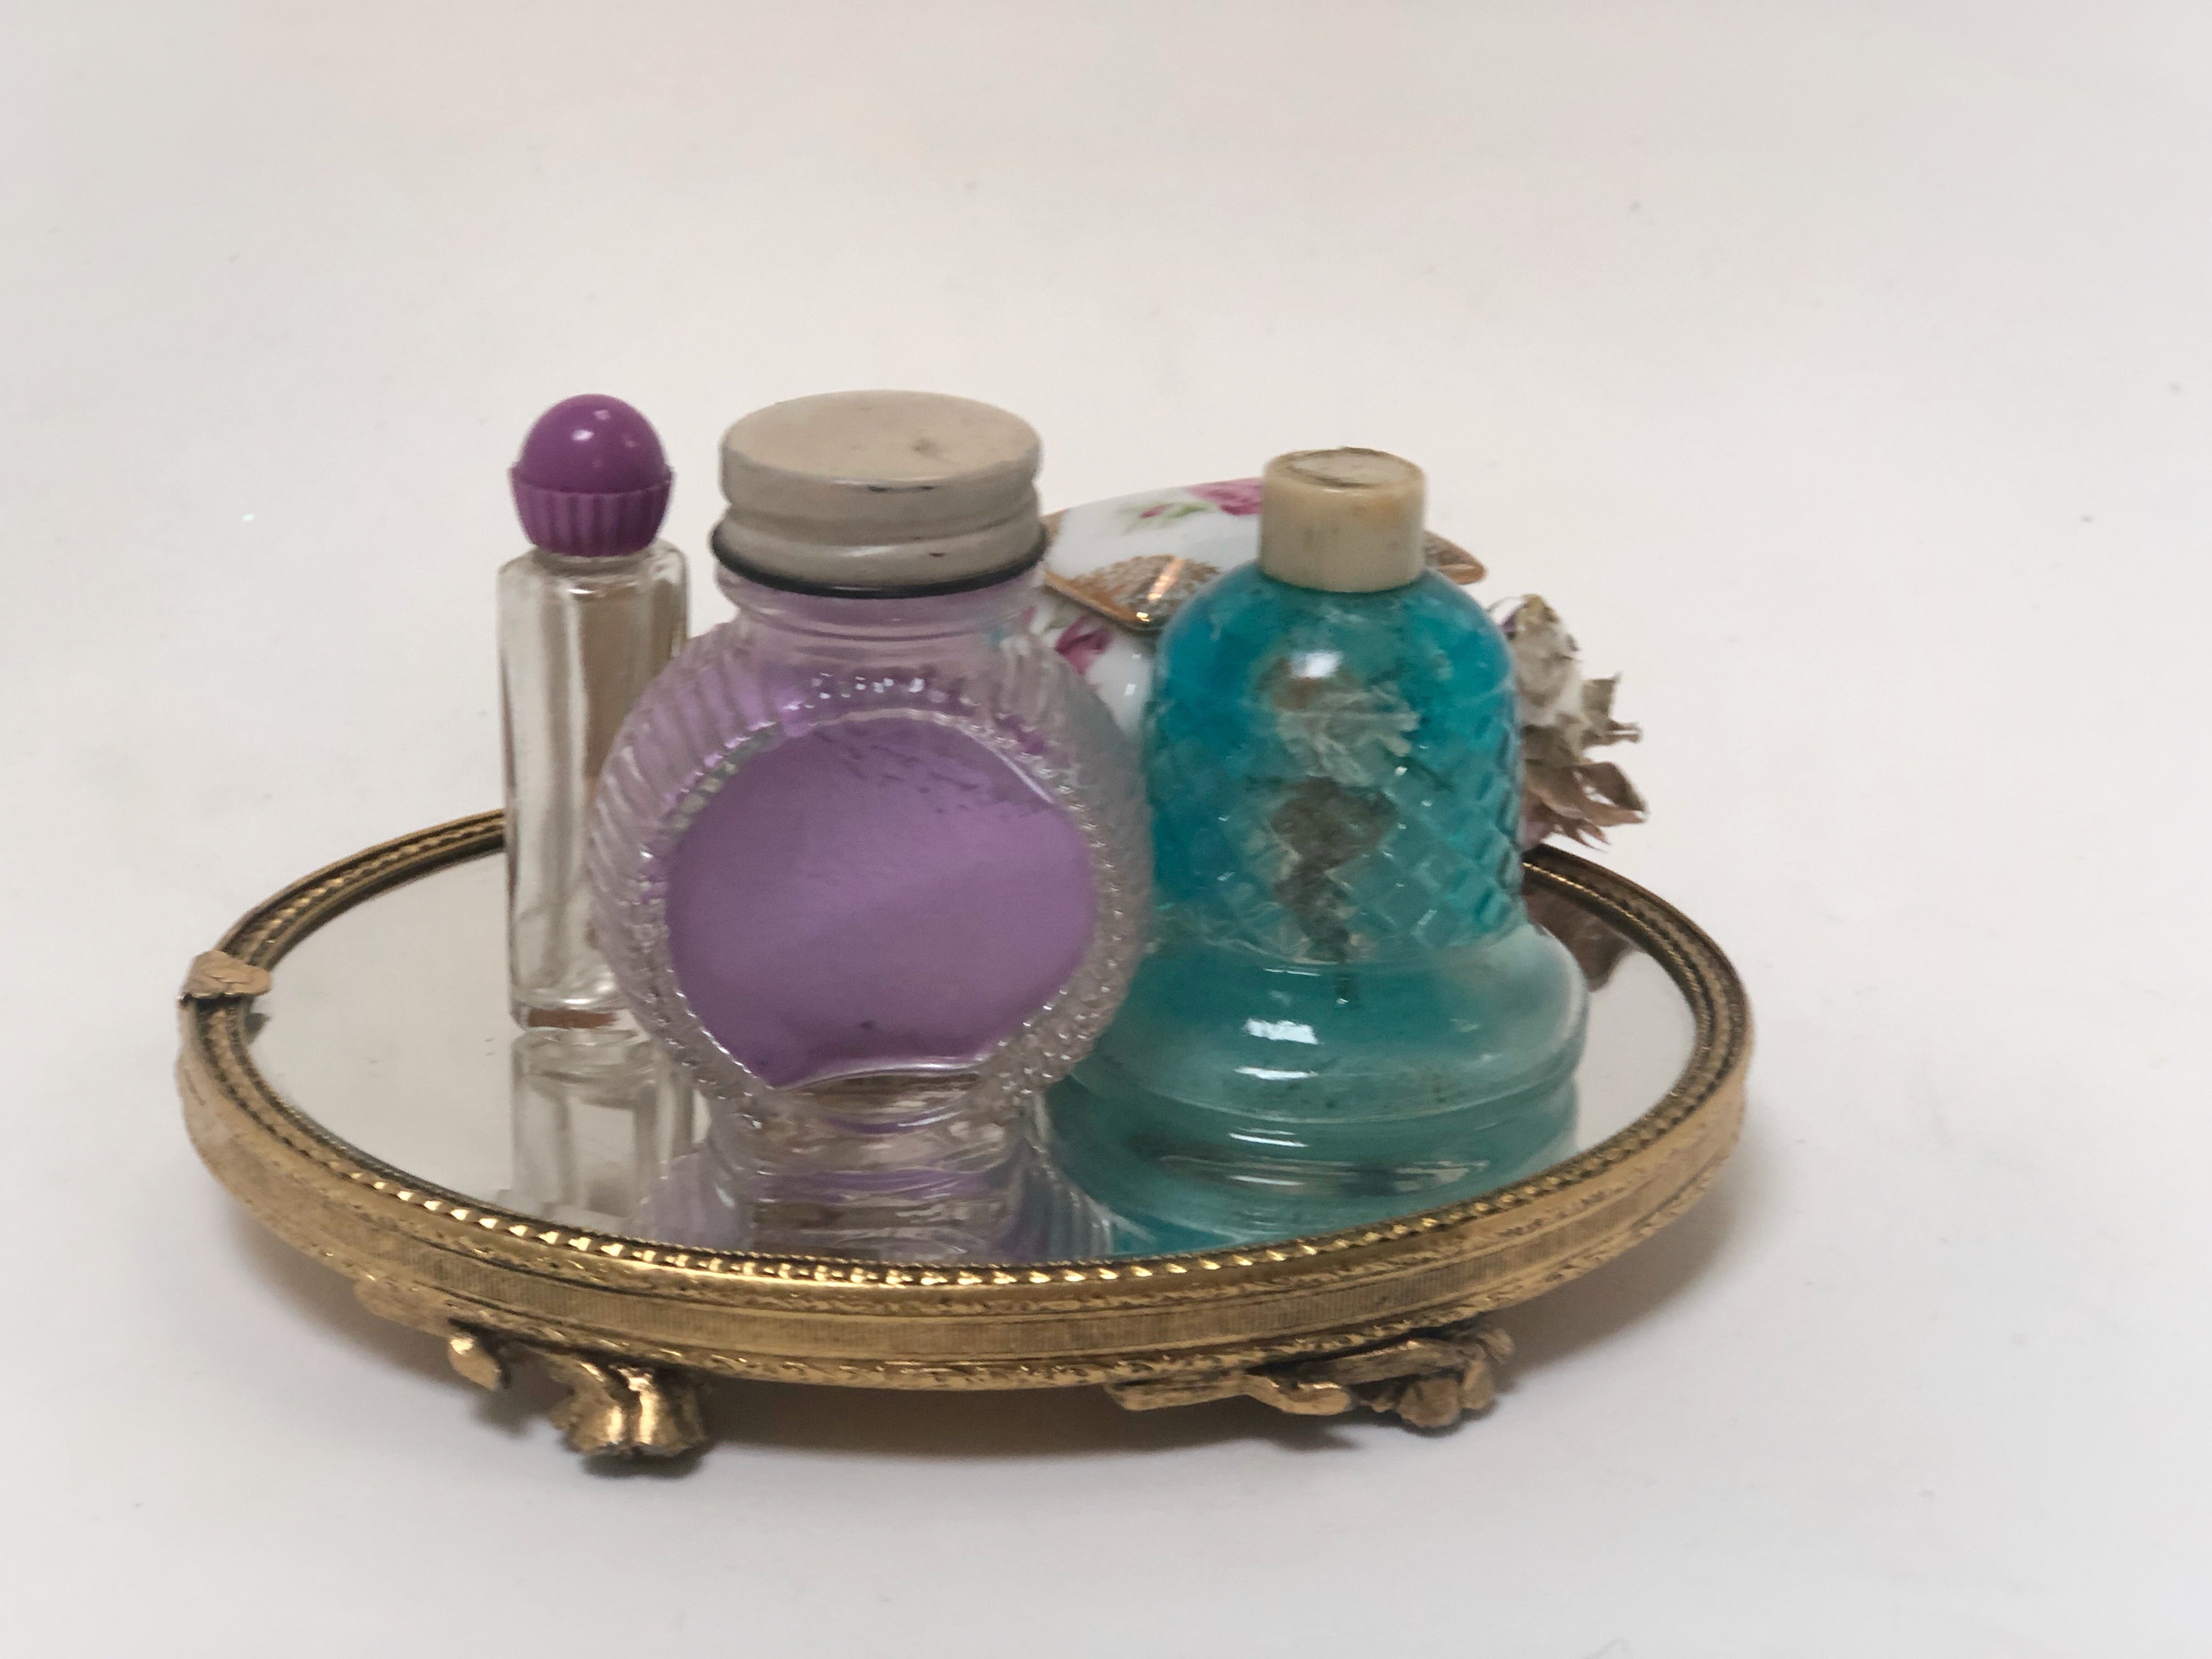 Vintage Floral Miniature Vanity Mirror Tray